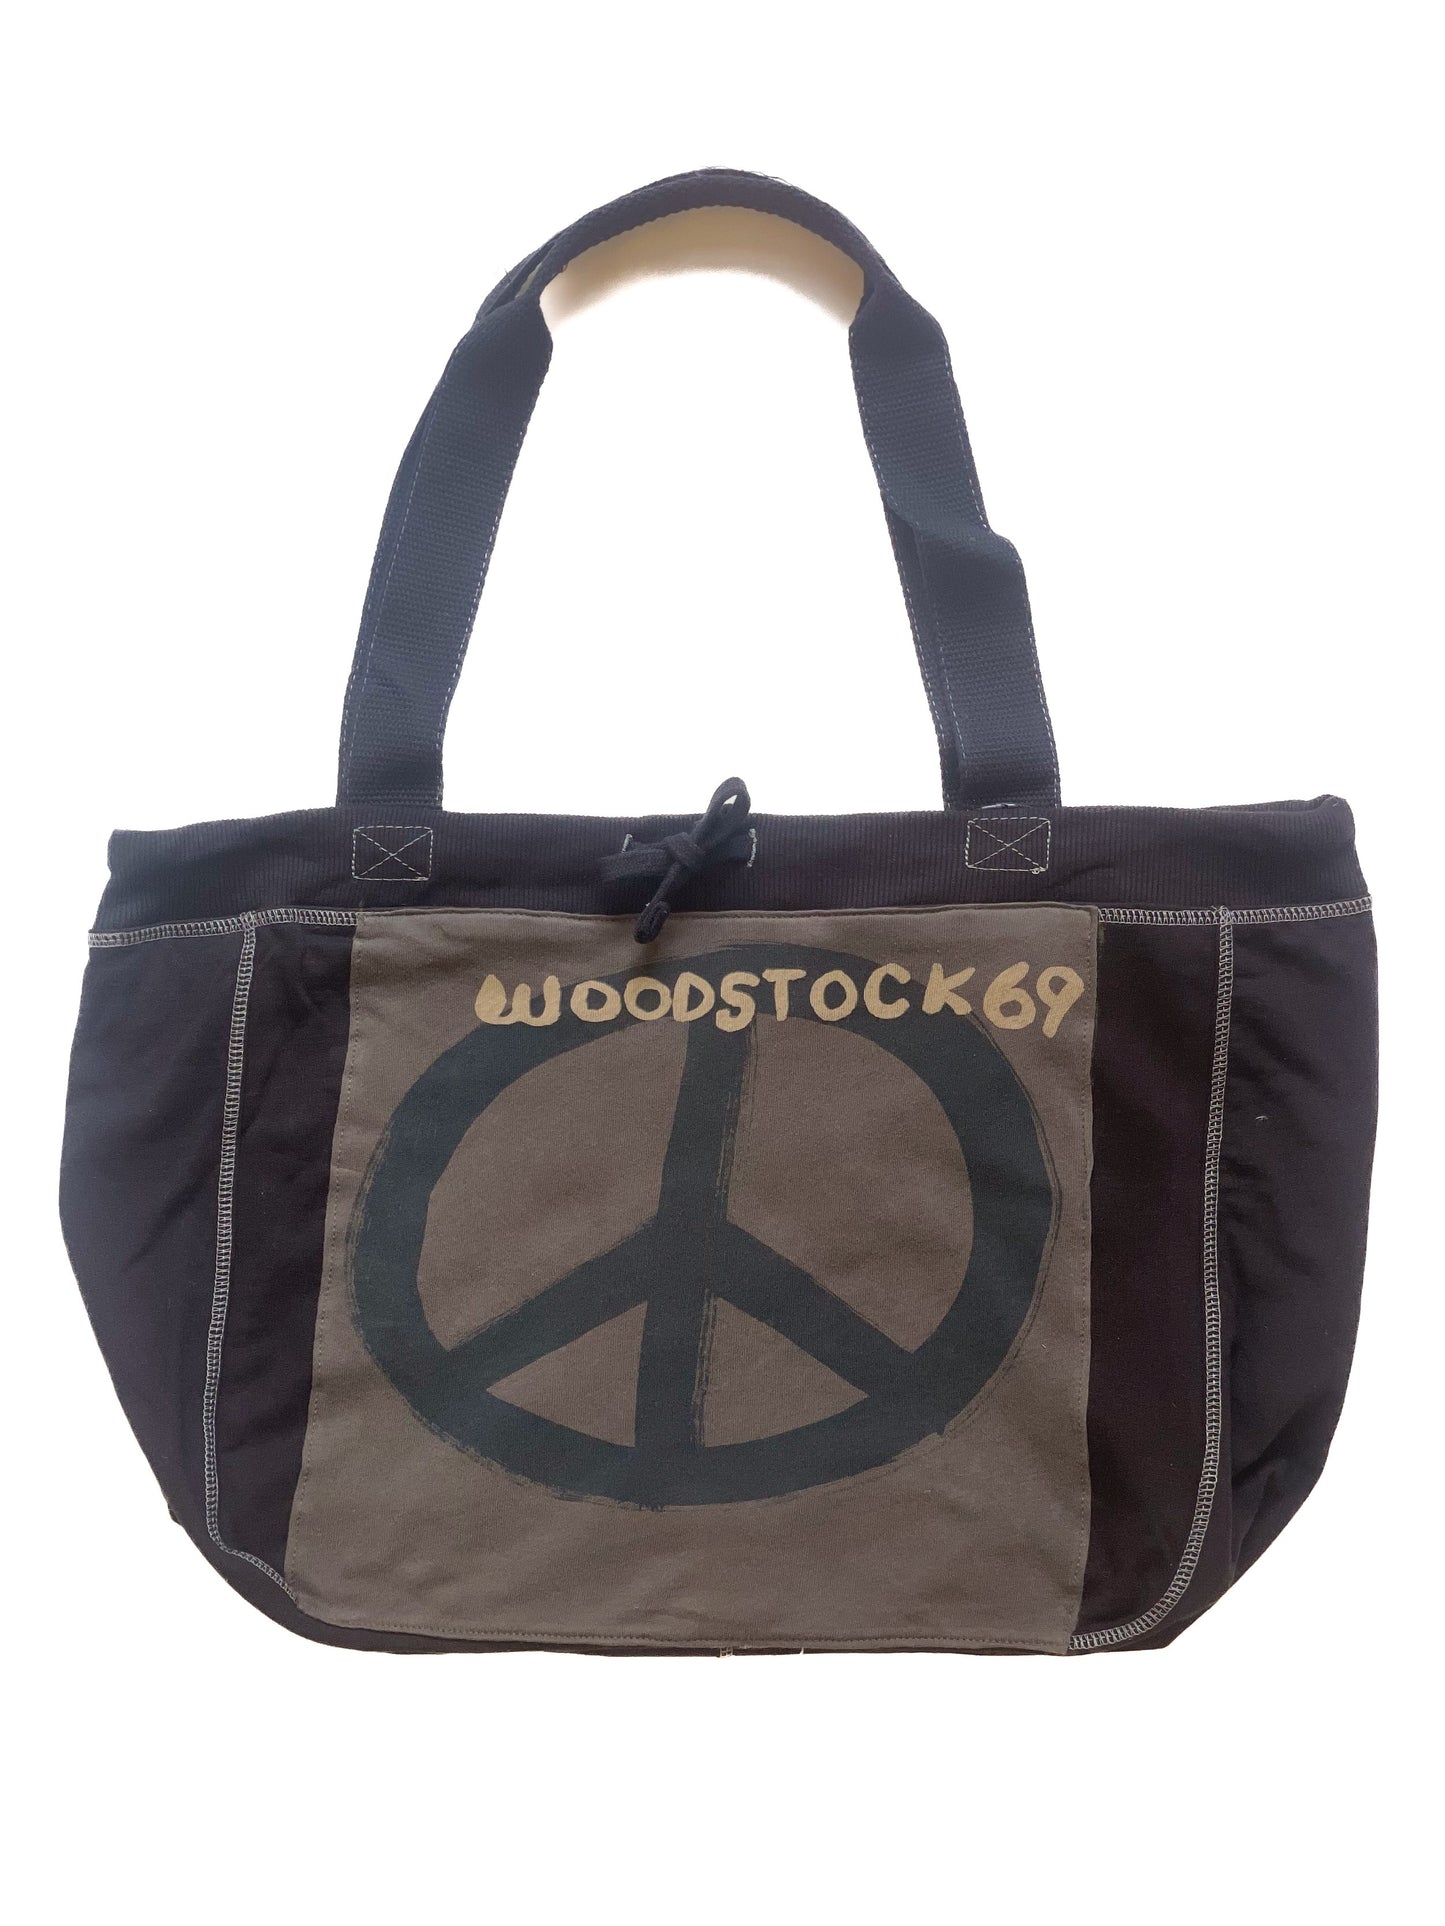 Woodstock 69 Sweats Bag